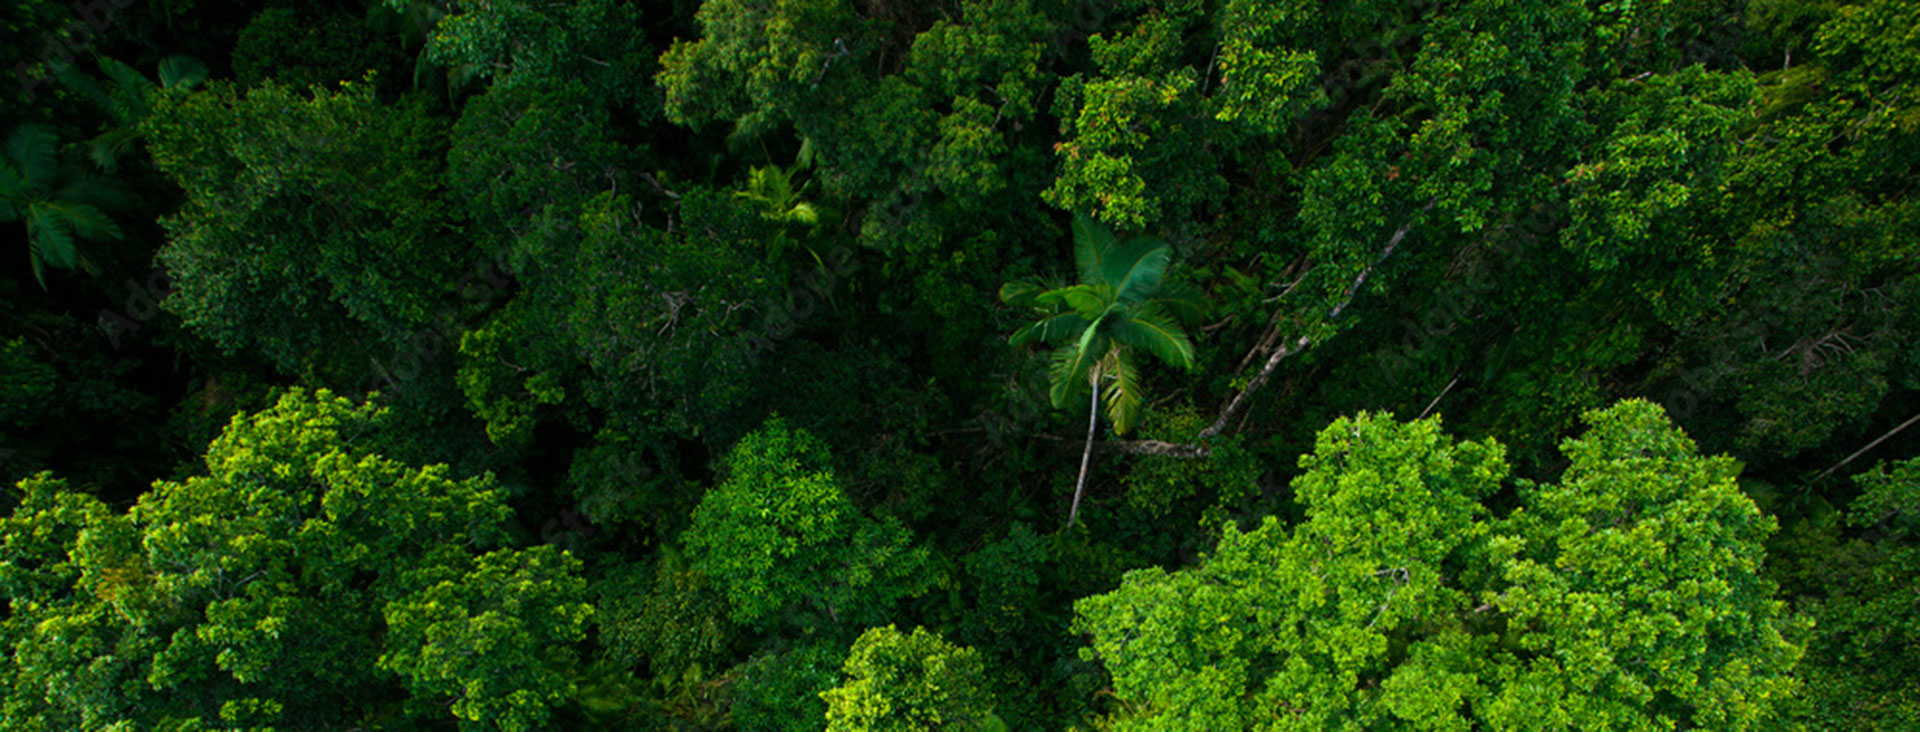 World Heritage-listed rainforest